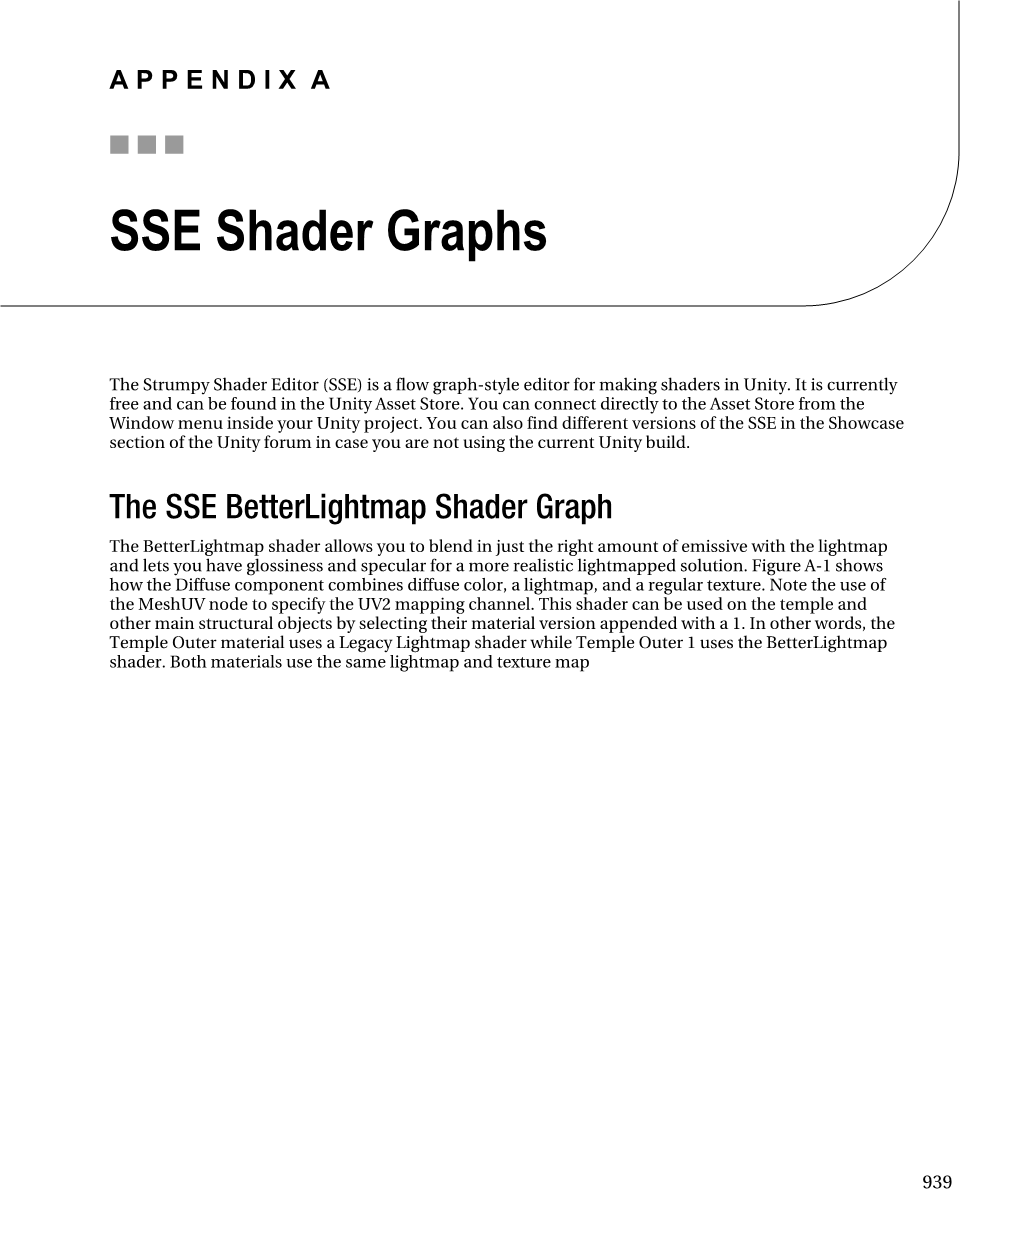 SSE Shader Graphs